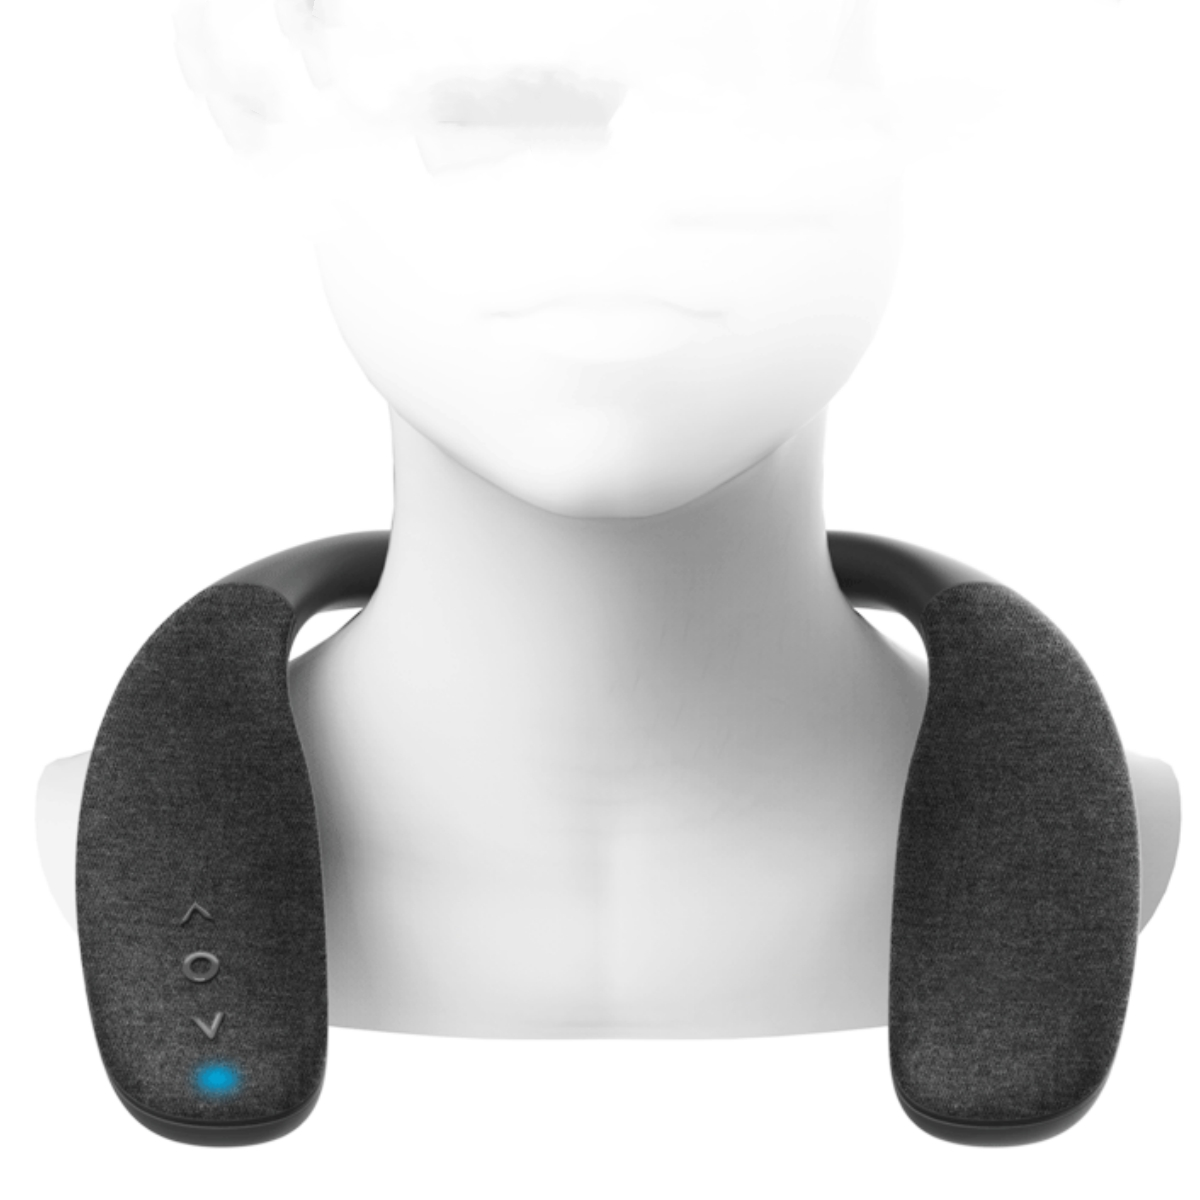 Wireless SHAOKE Subwoofer Portable Echo Wall Bluetooth-Lautsprecher Weiß Wearable Subwoofer, Hals